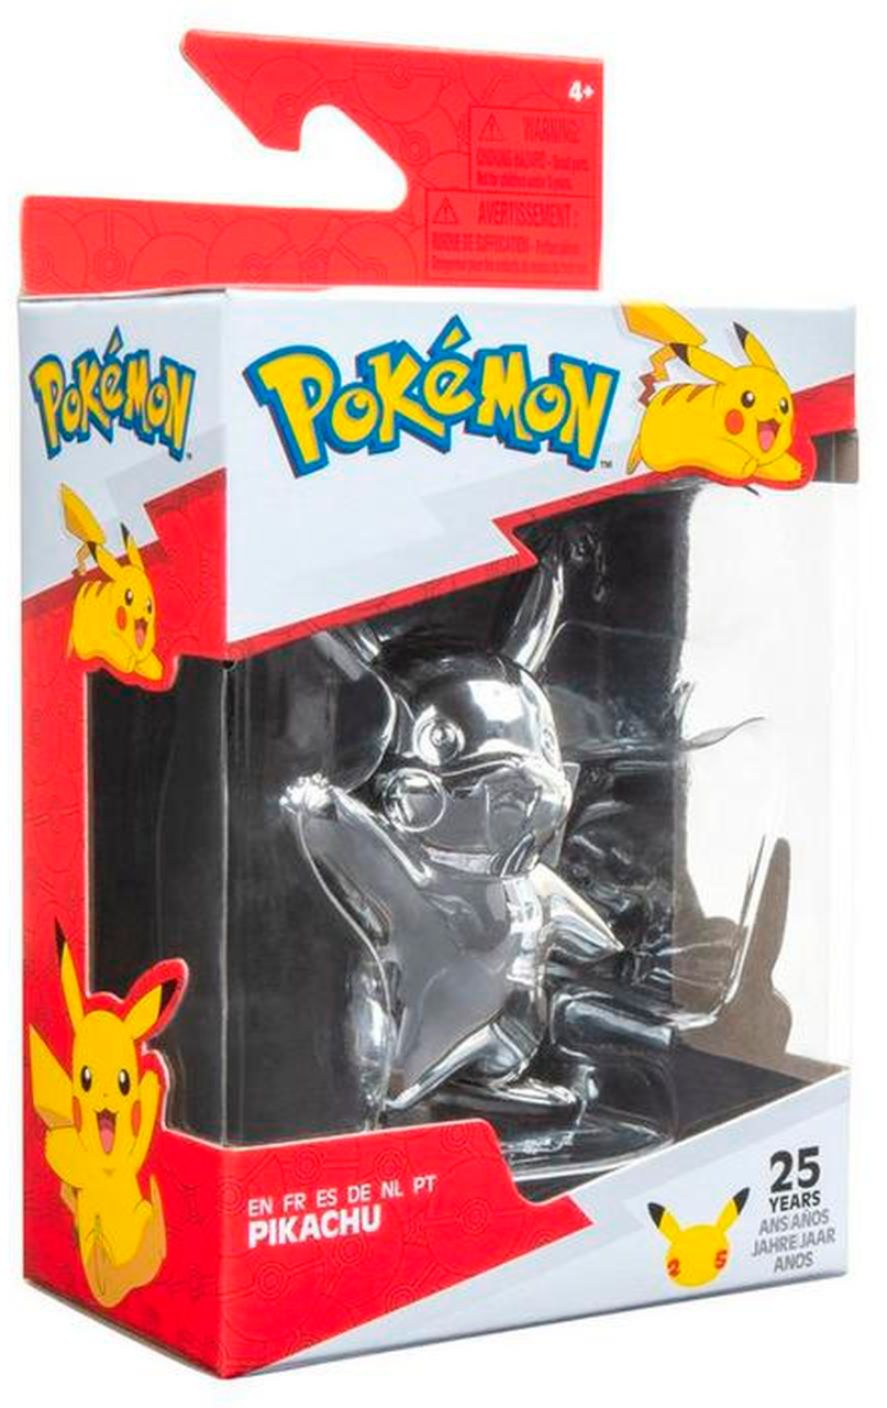 Pikachu 2 bras levés (Pokemon) figurine 6cm – Destination figurines